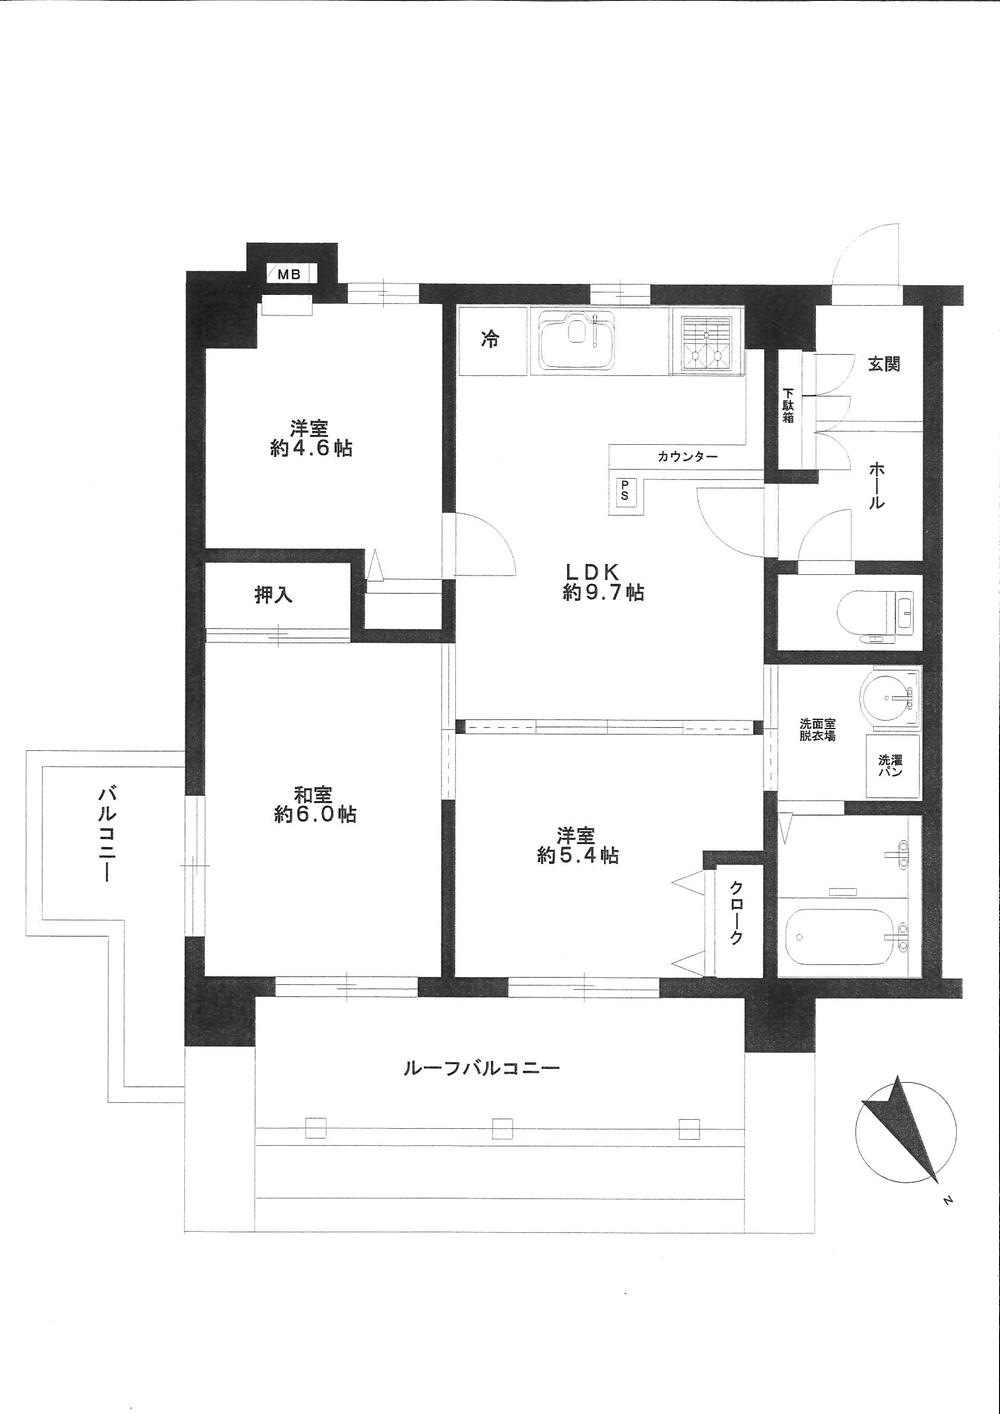 Floor plan. 2LDK + S (storeroom), Price 23.8 million yen, Occupied area 56.53 sq m , Balcony area 6 sq m